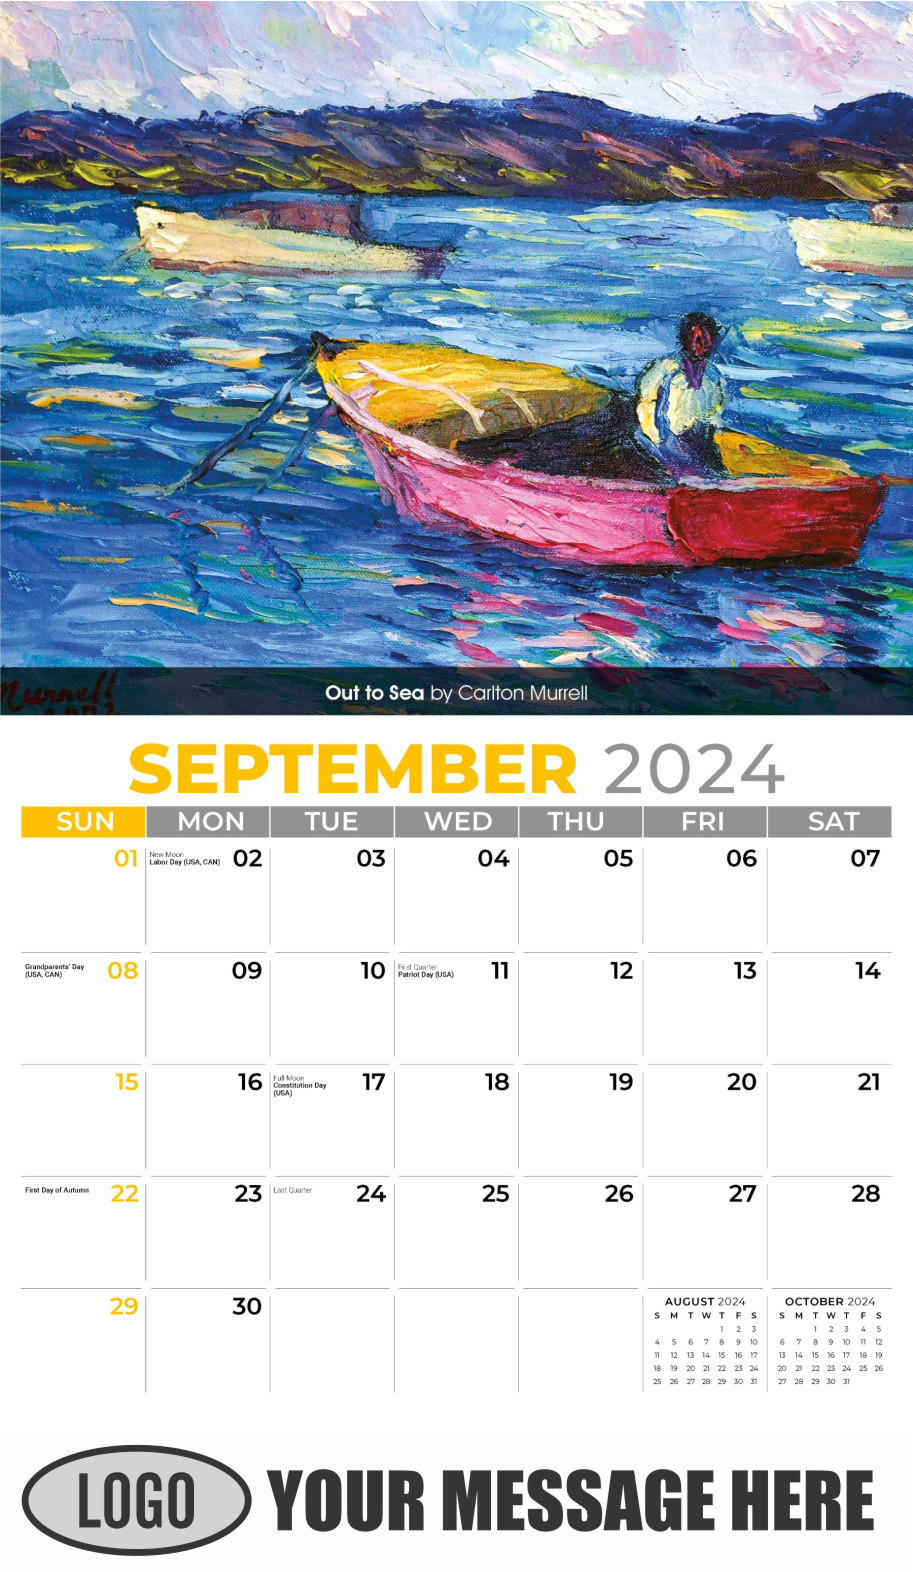 Celebration of African American Art 2024 Business Promotional Calendar - September